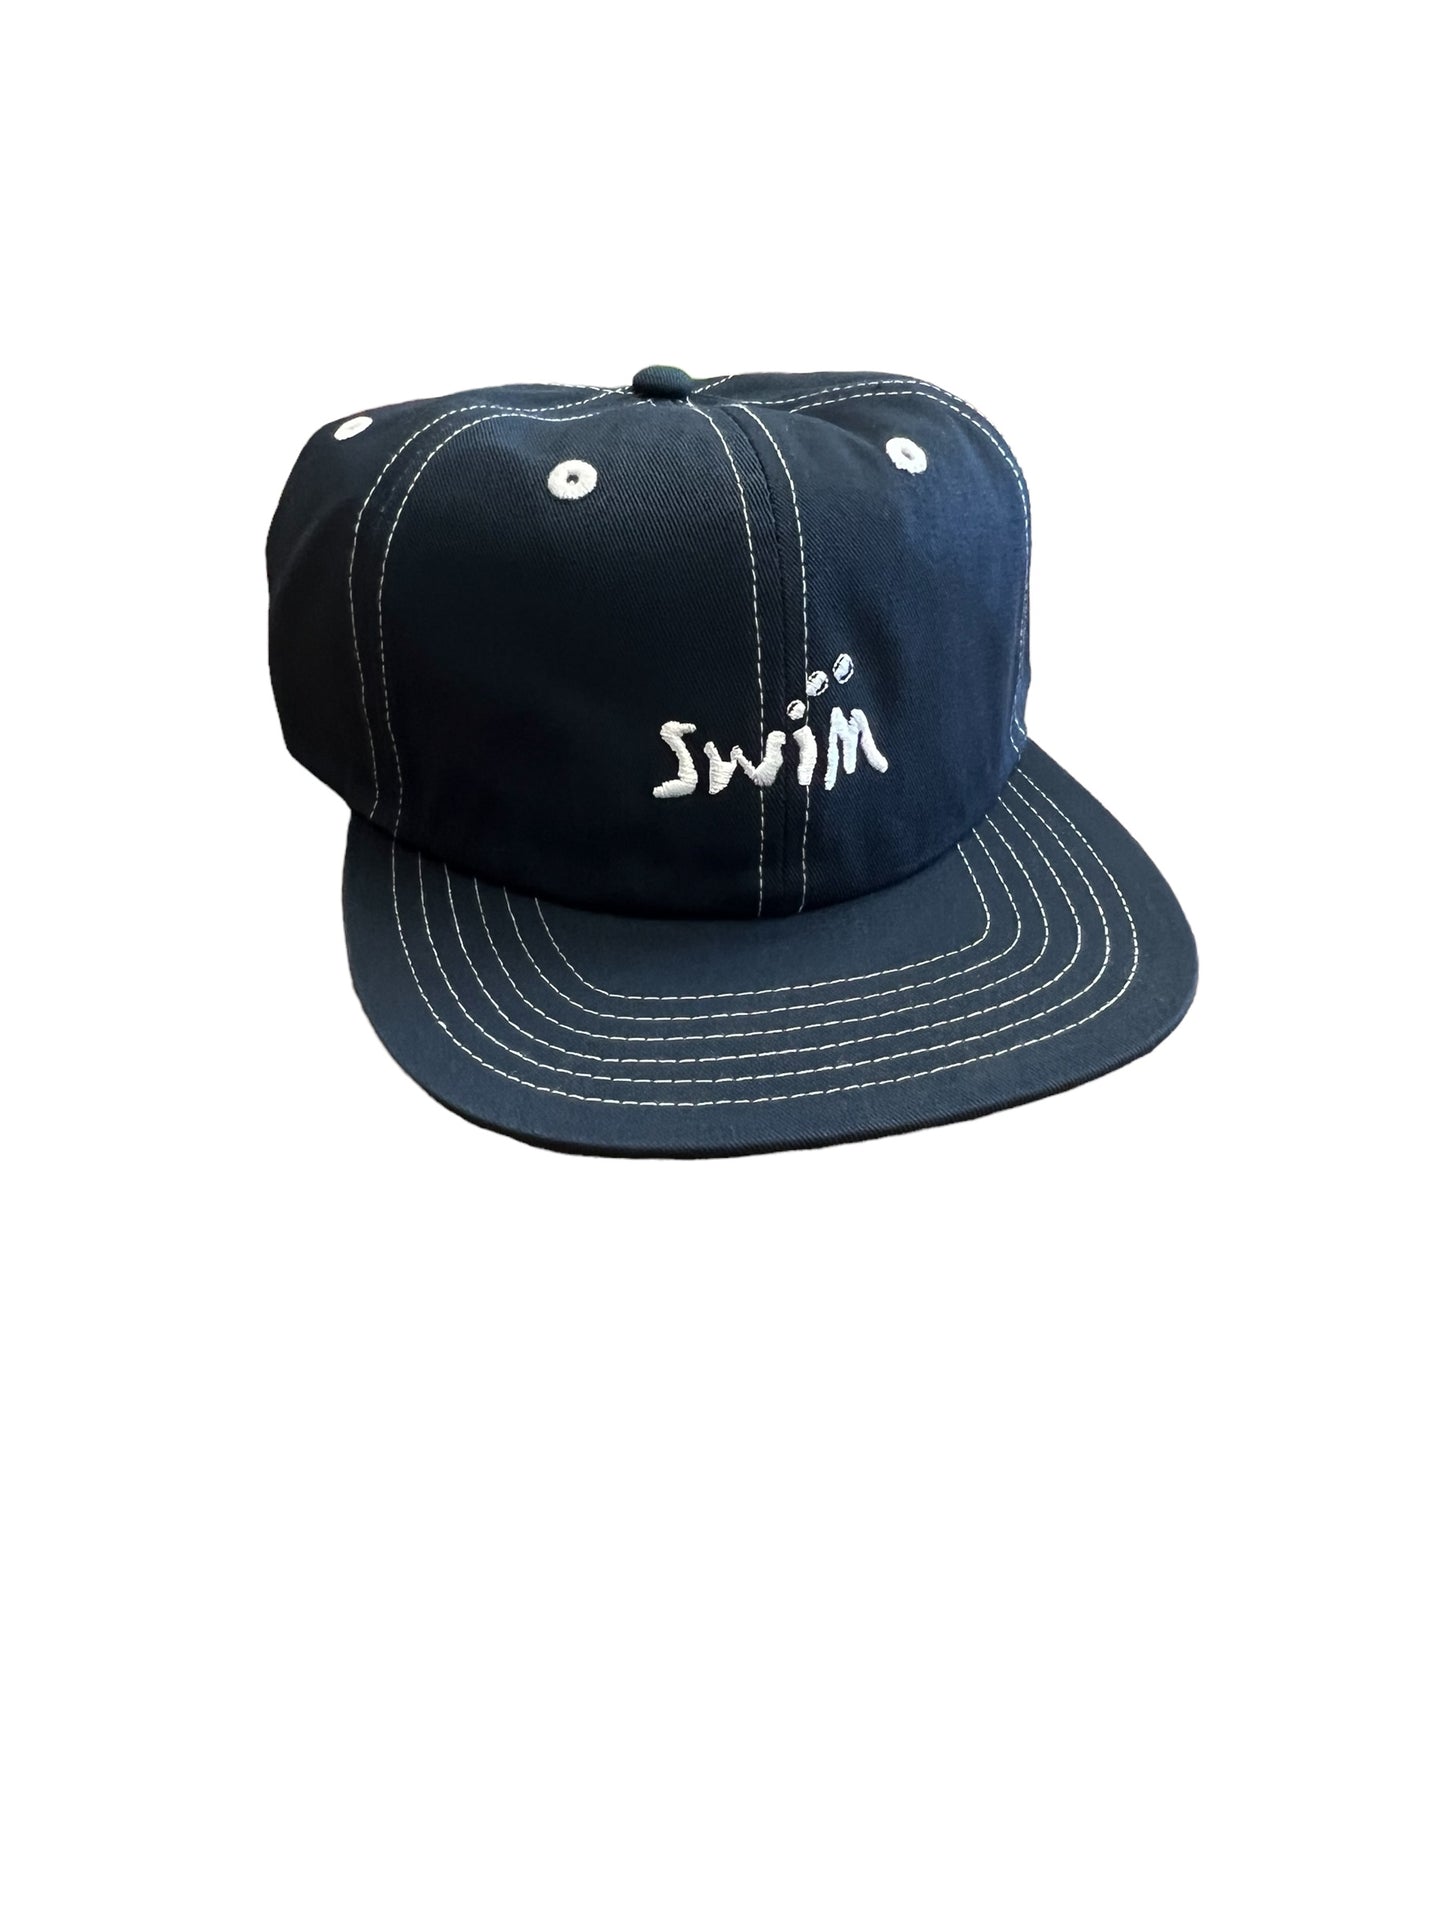 Swim Six Panel Hat (navy and white)